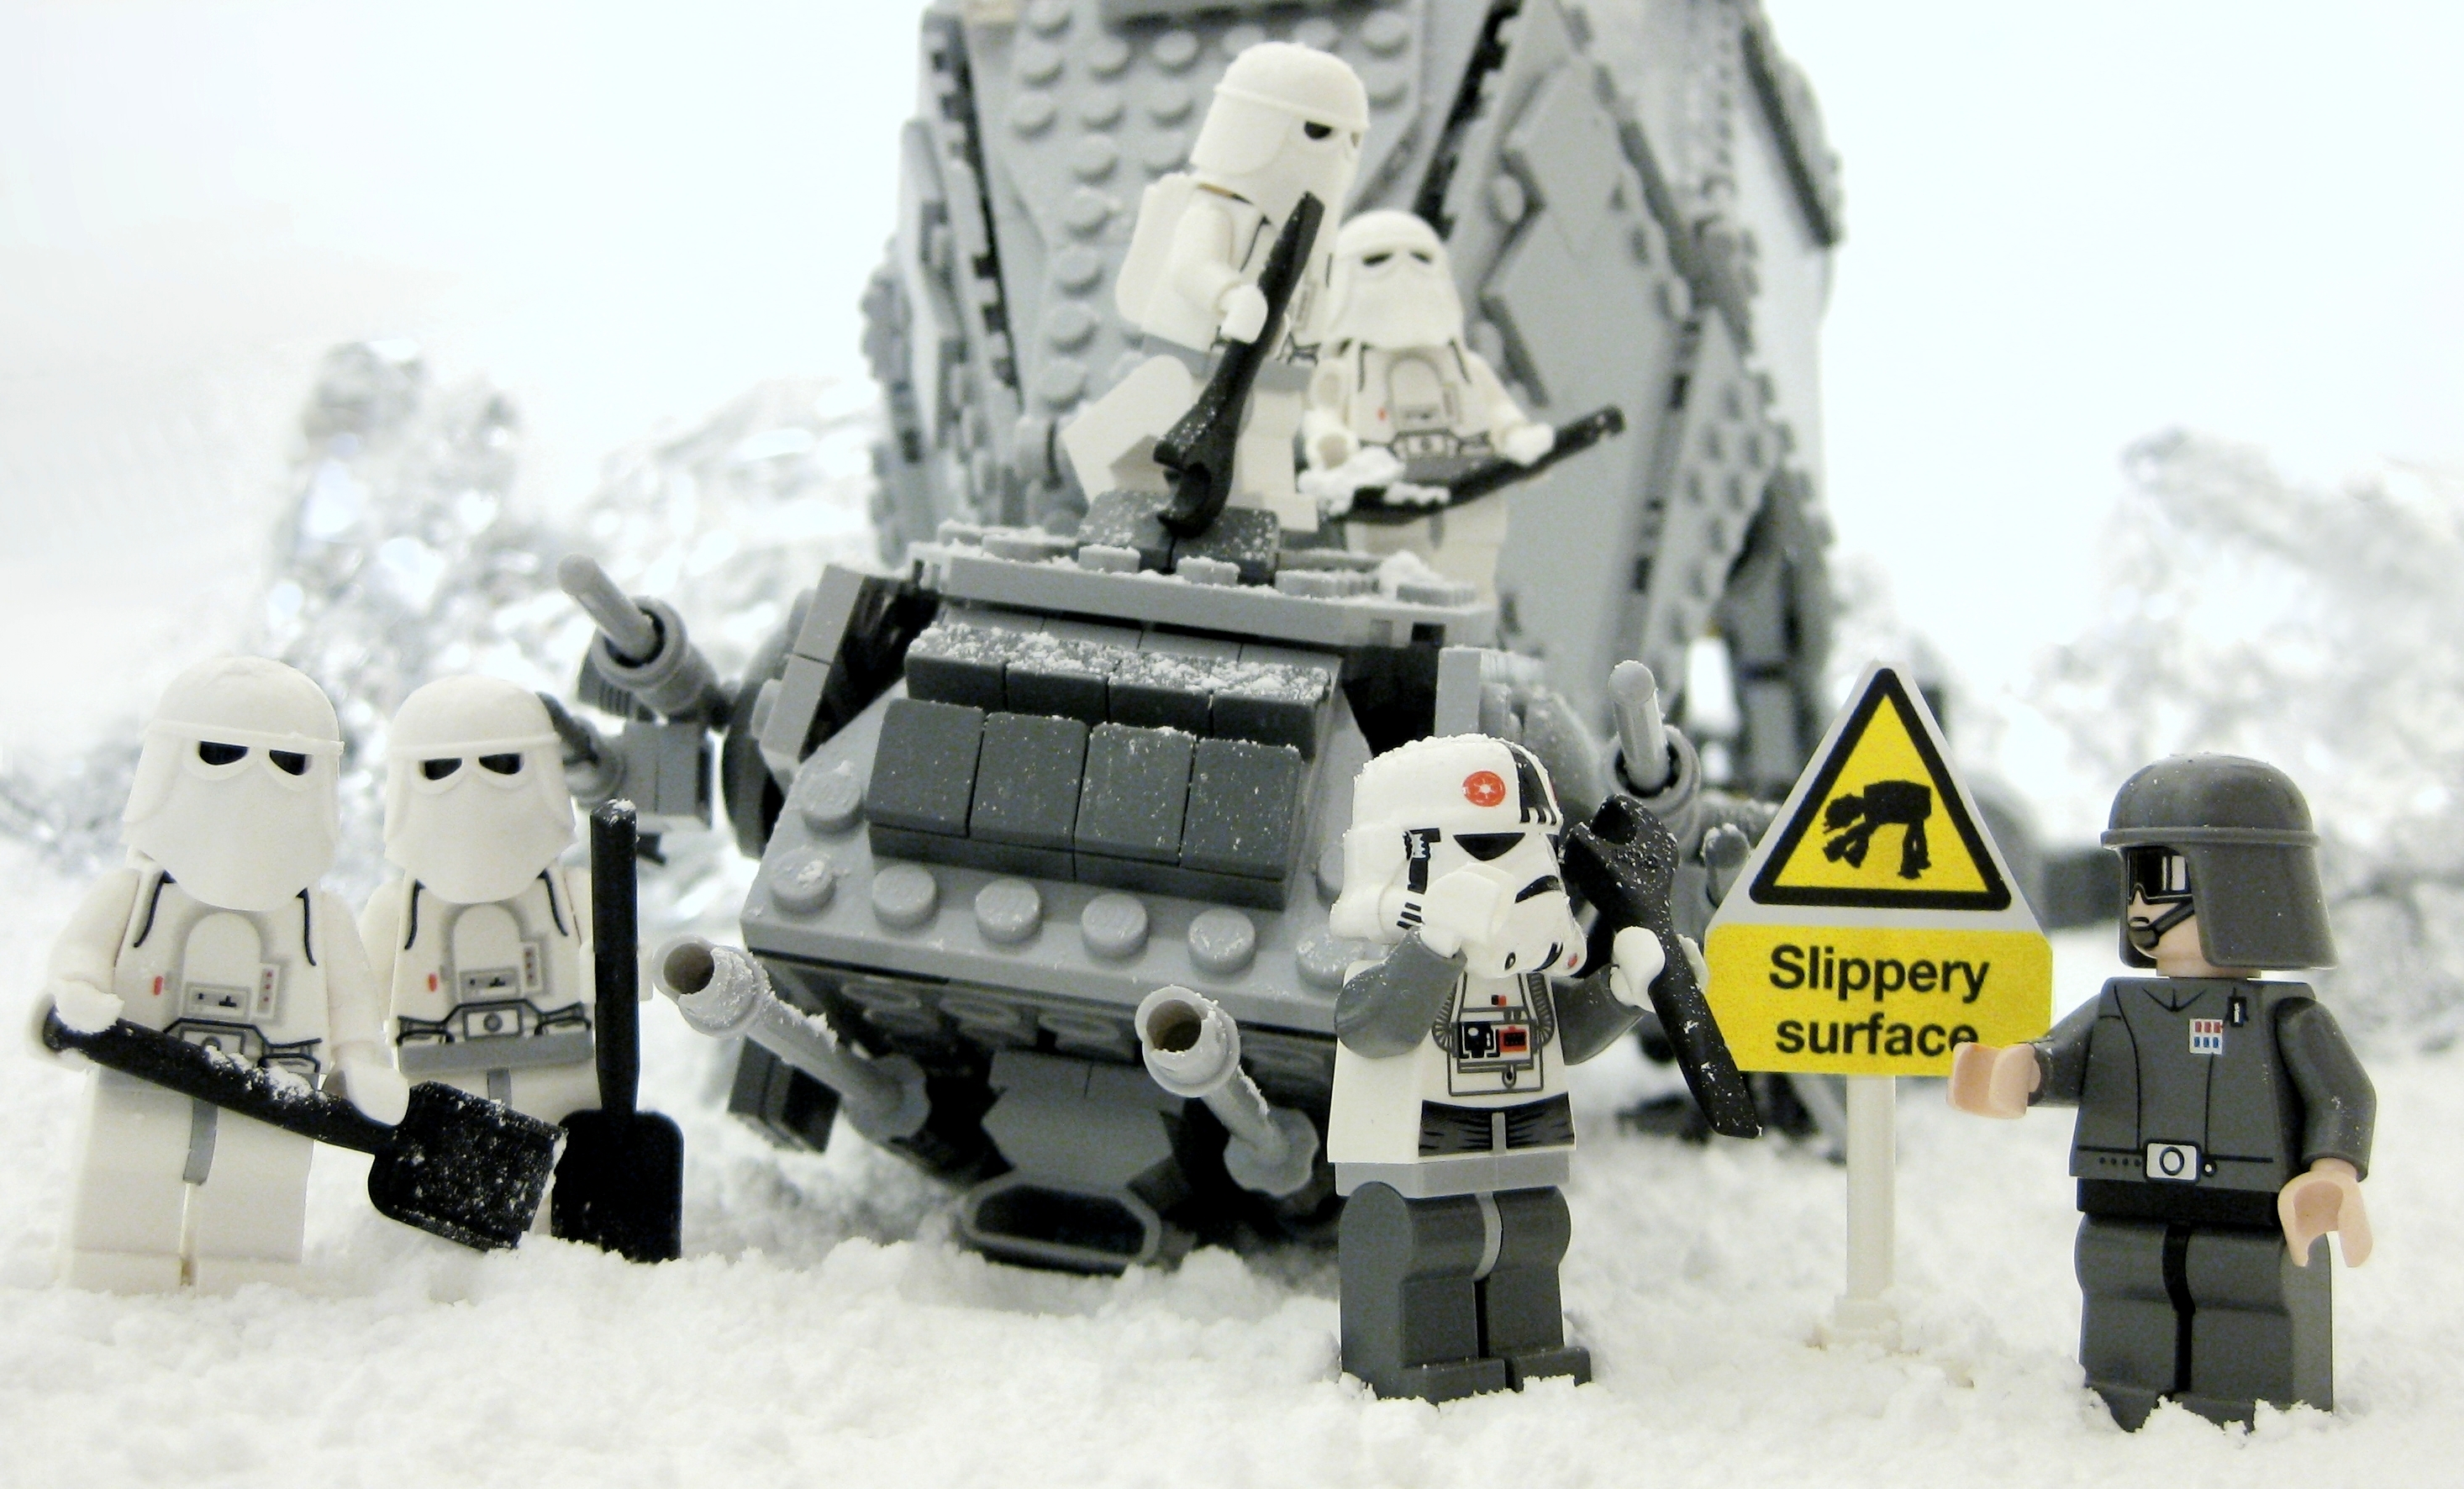 General 2932x1772 toys LEGO humor Star Wars Humor figurines Snow Trooper miniatures closeup Star Wars signs snow shovels